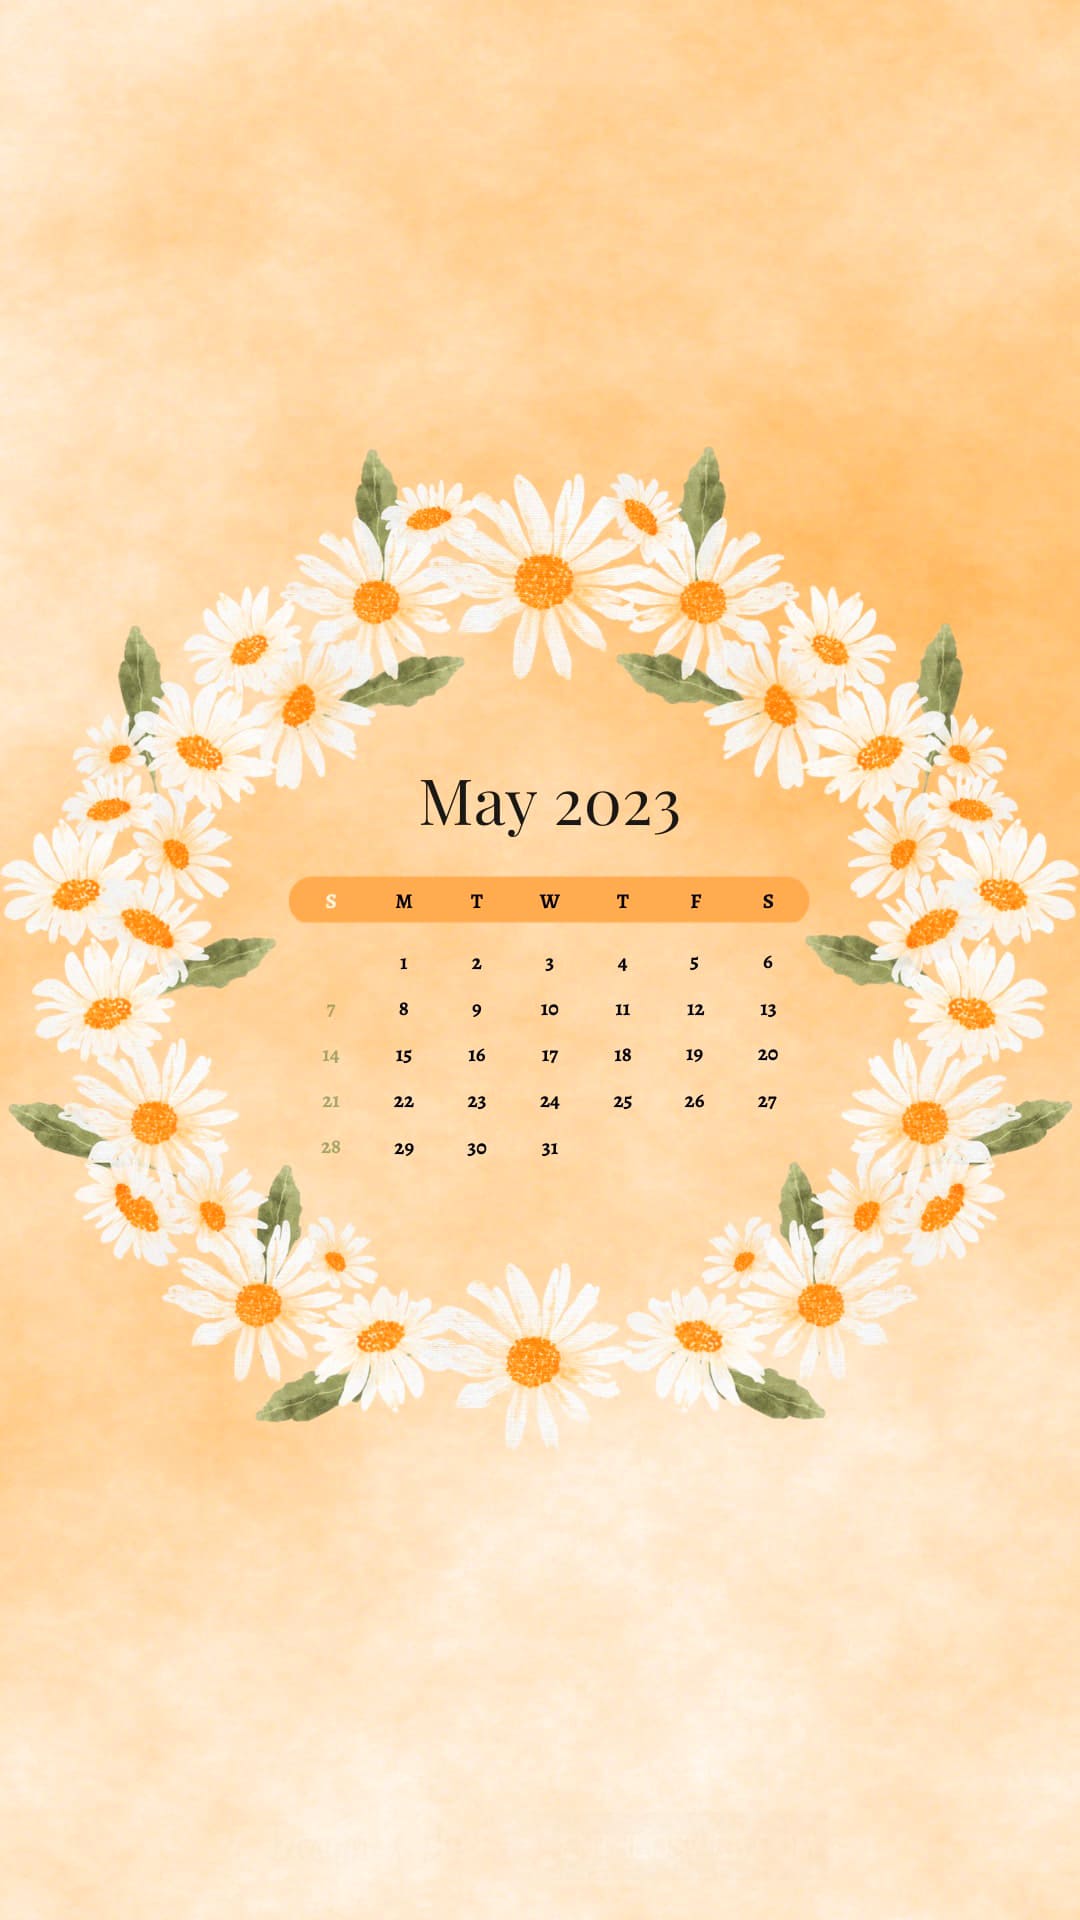 May 2023 Calendar Wallpapers